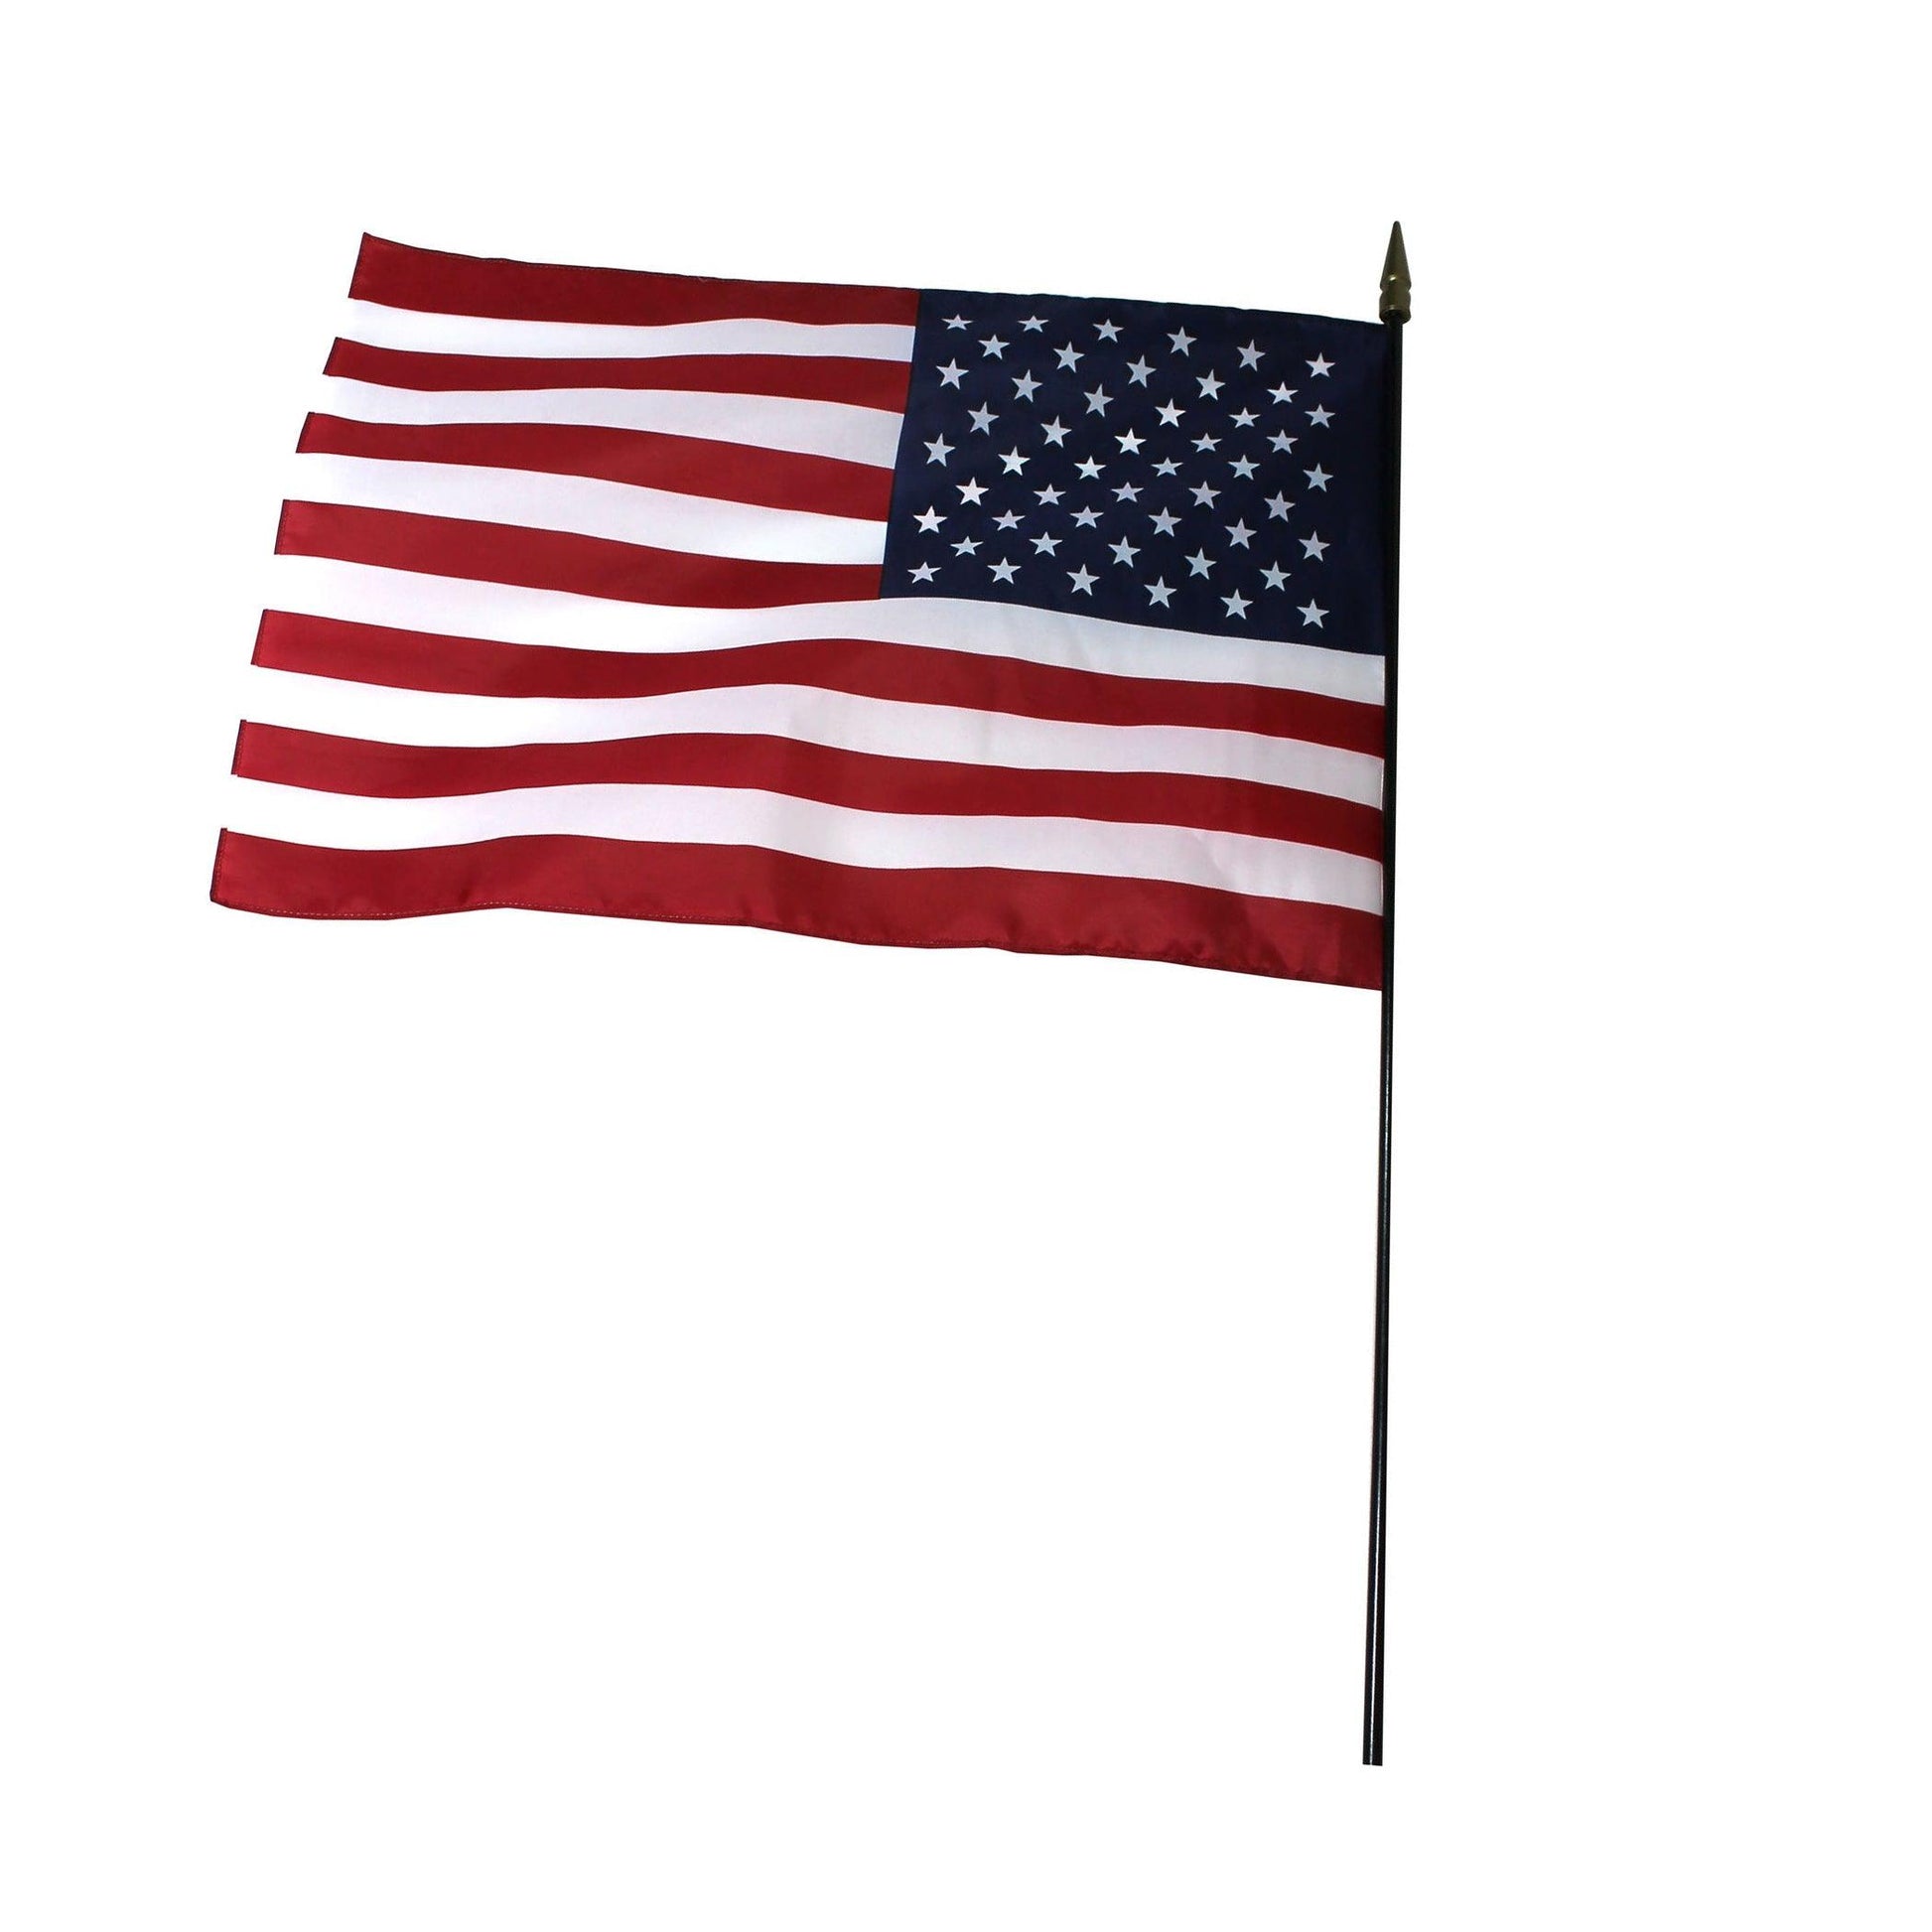 U.S. Classroom Flag, 16" x 24" with Staff, Pack of 3 - Loomini